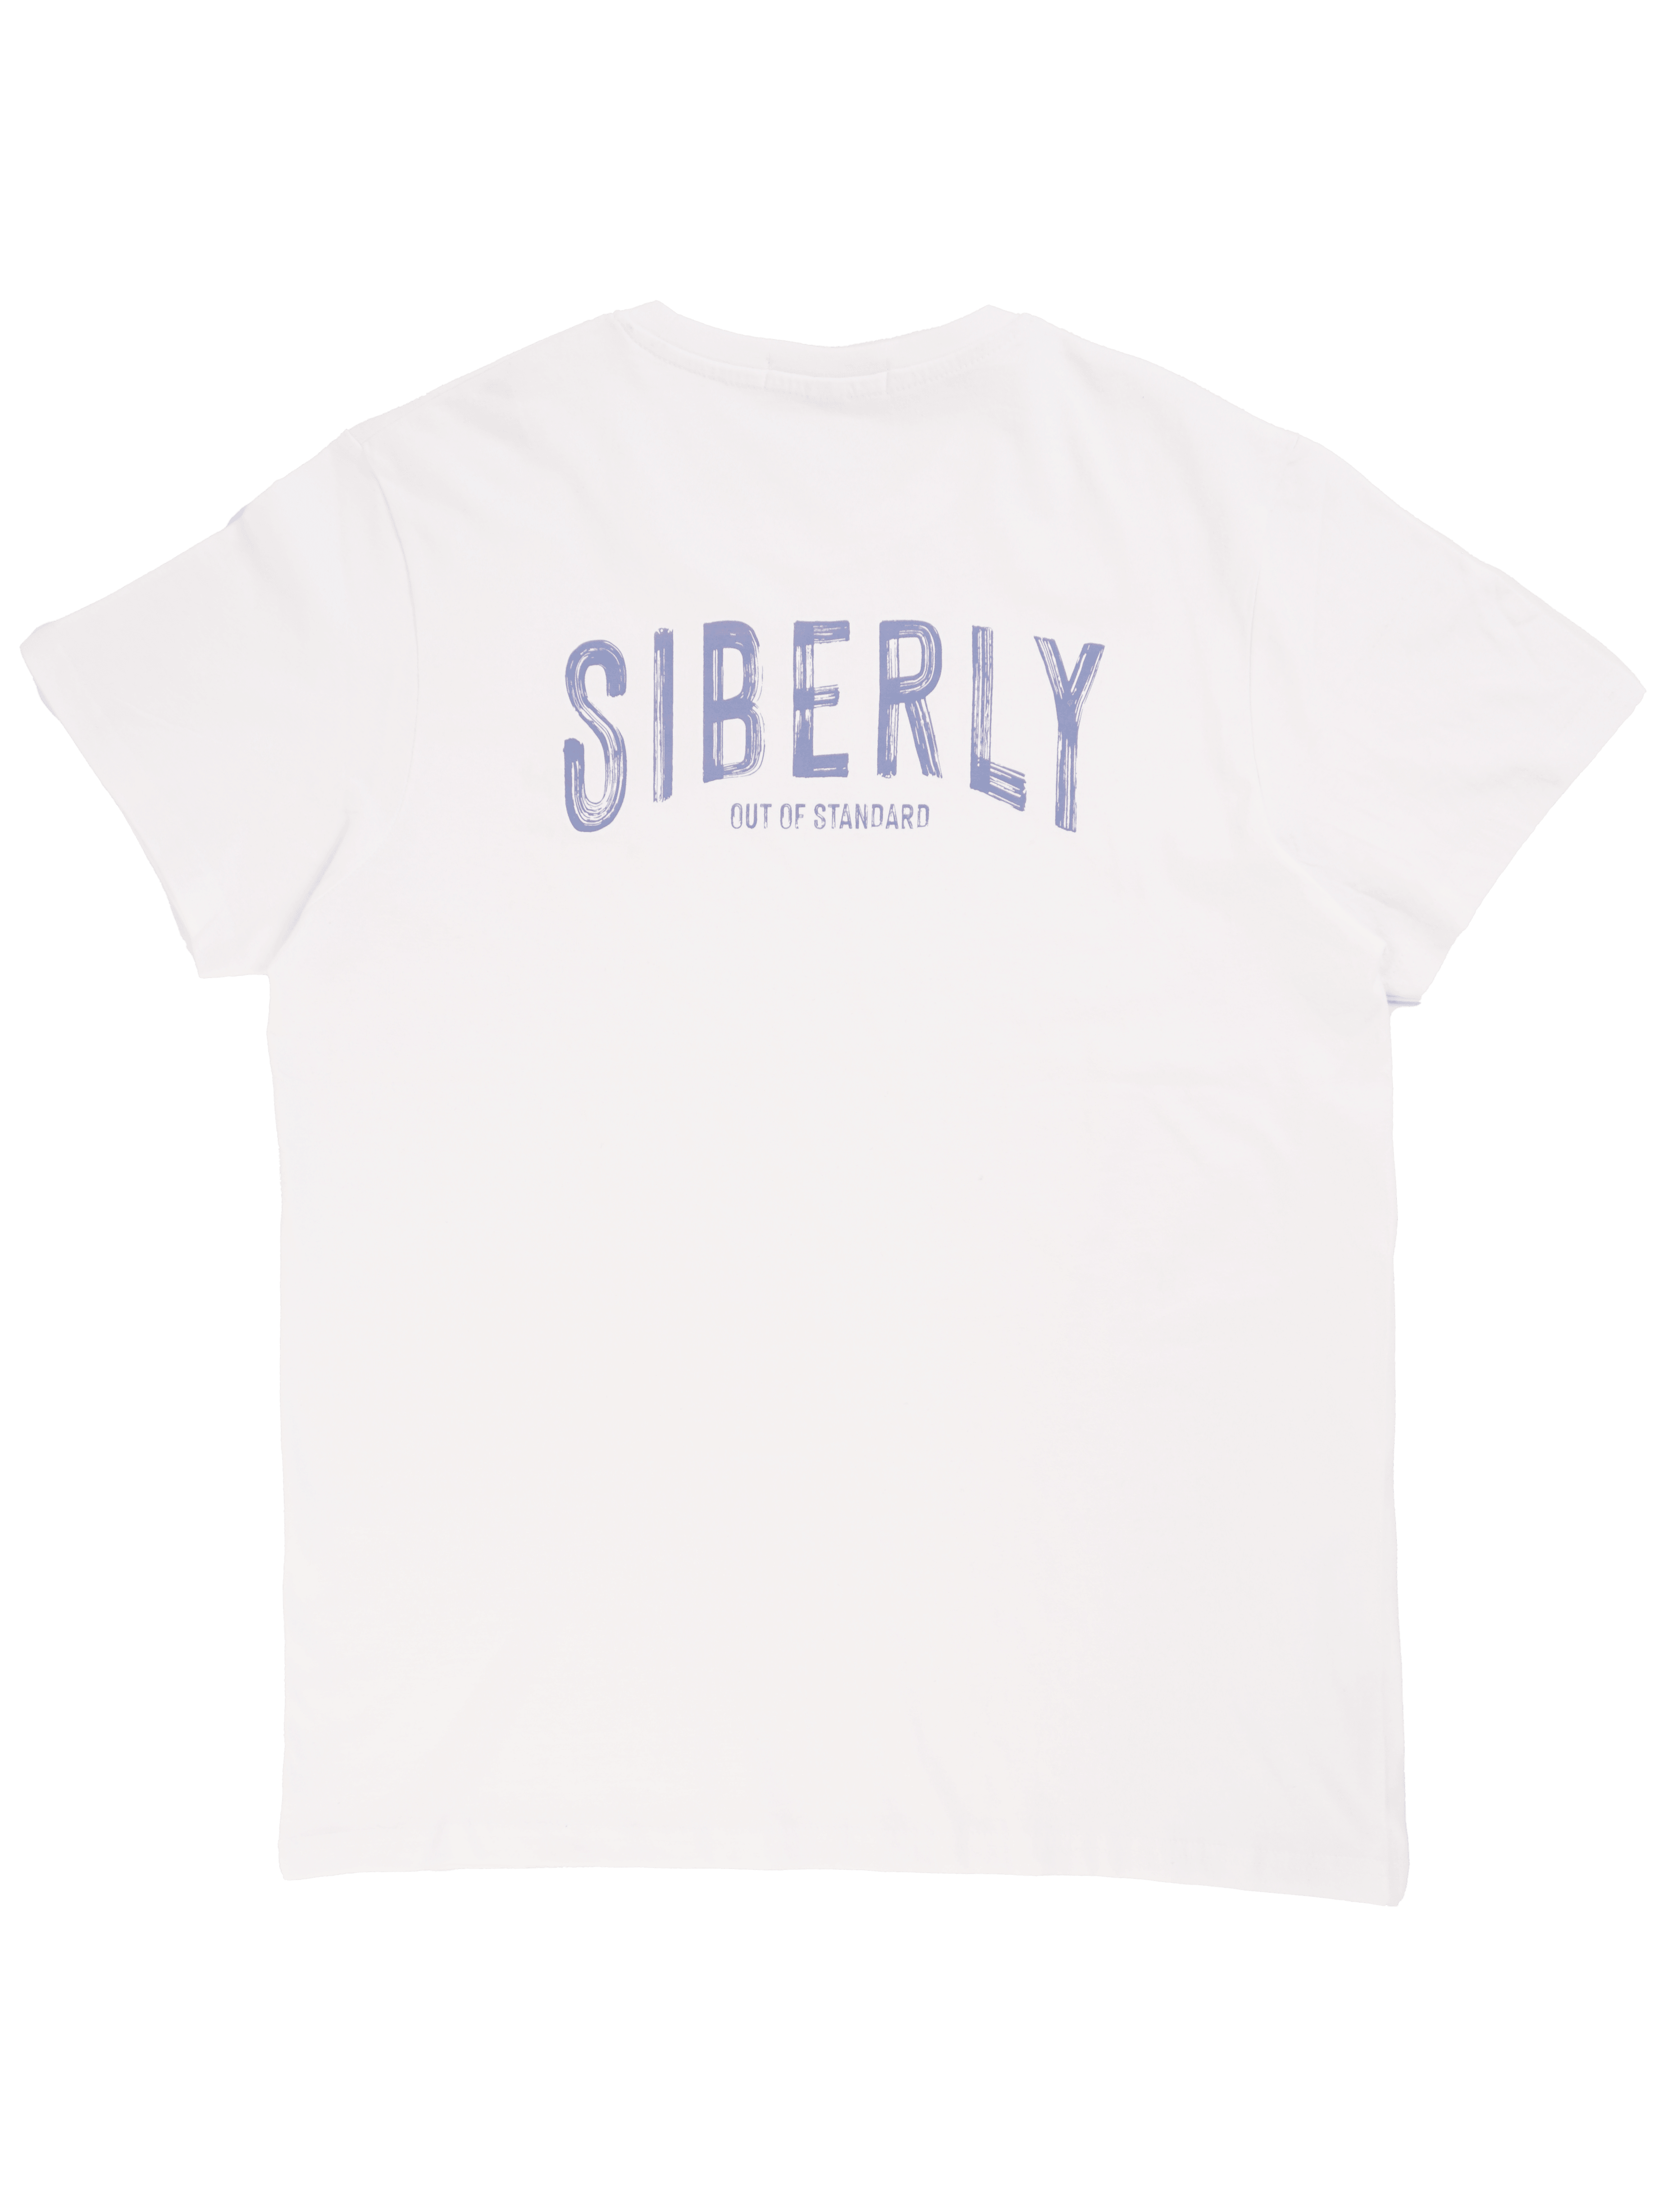 Camiseta graffiti blanco - SIBERLY